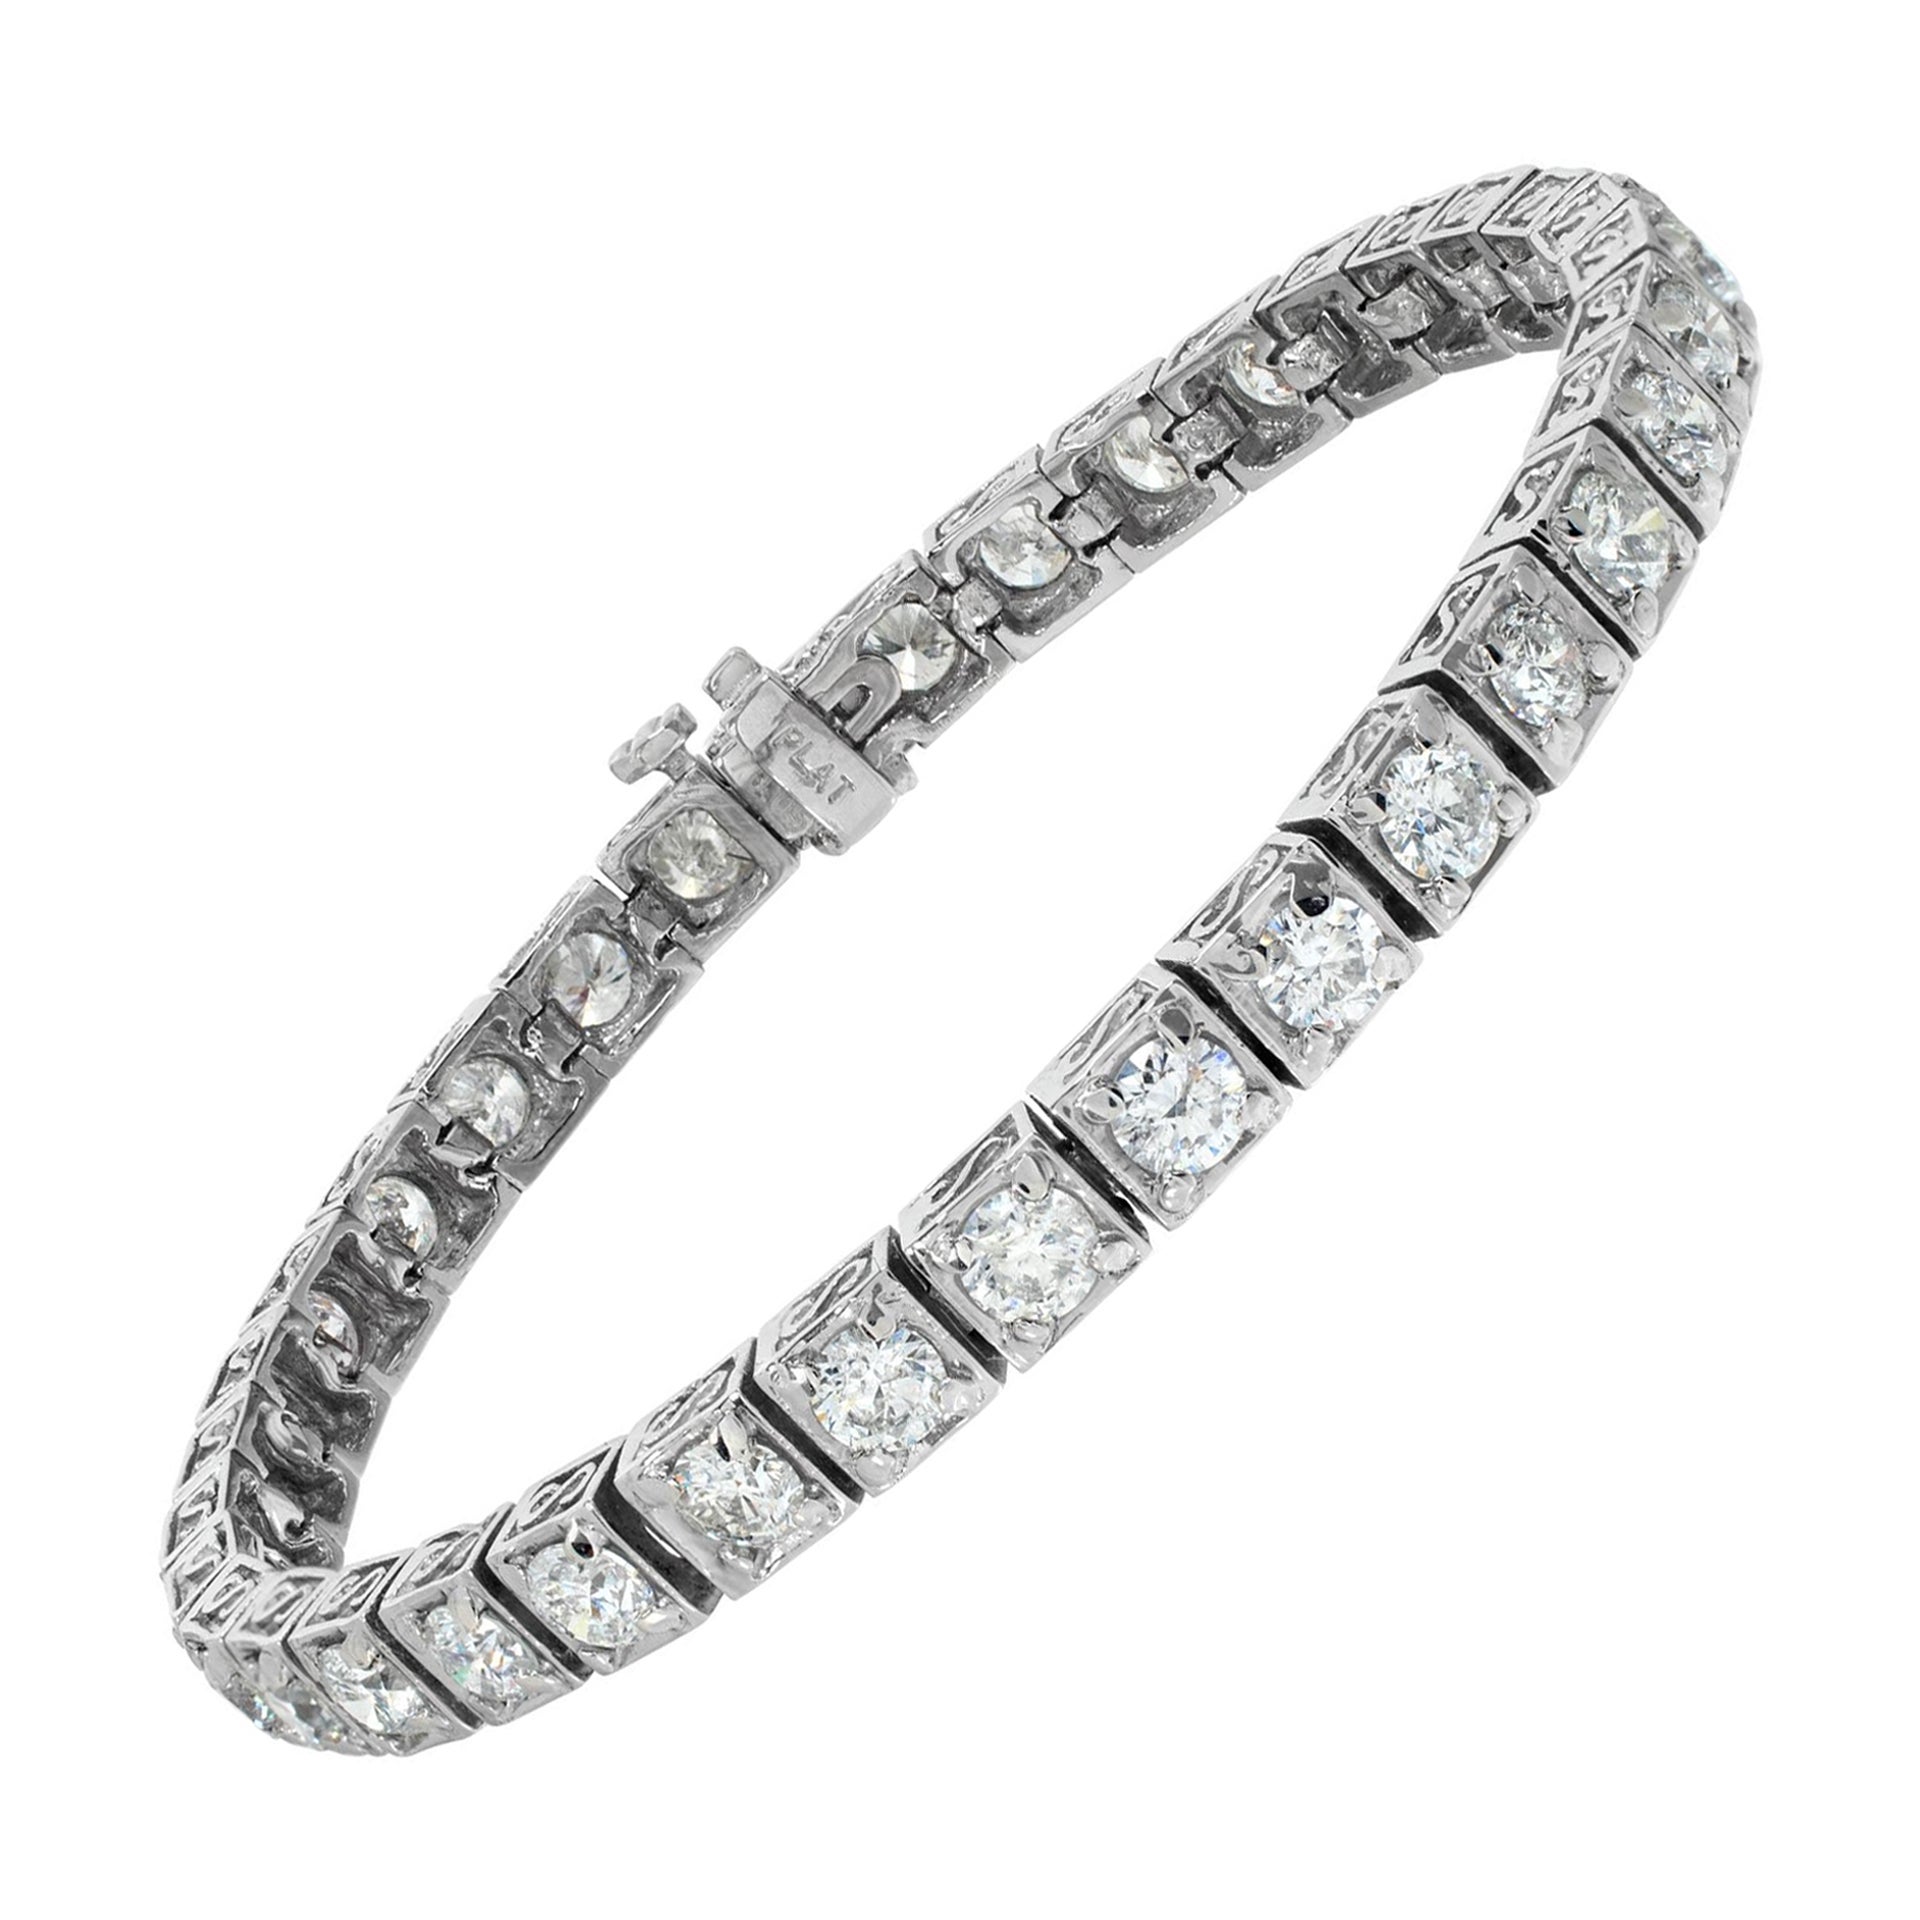 Platinum diamond bracelet w/ round brilliant cut diamonds set in 4 prong setting For Sale